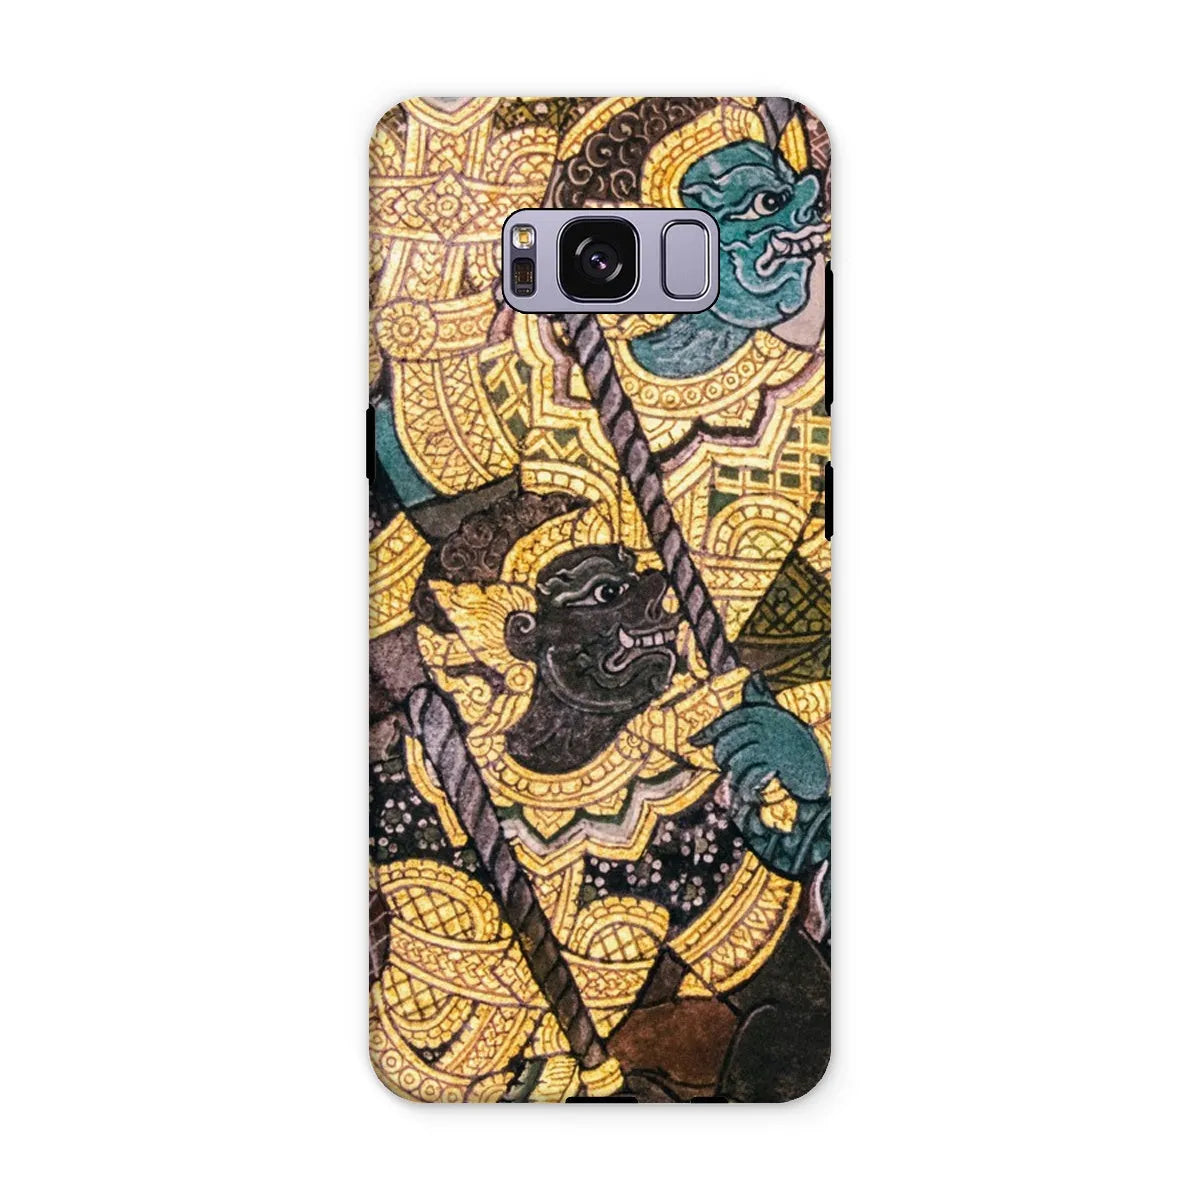 Action Men - Thai Aesthetic Art Phone Case - Samsung Galaxy S8 Plus / Matte - Mobile Phone Cases - Aesthetic Art